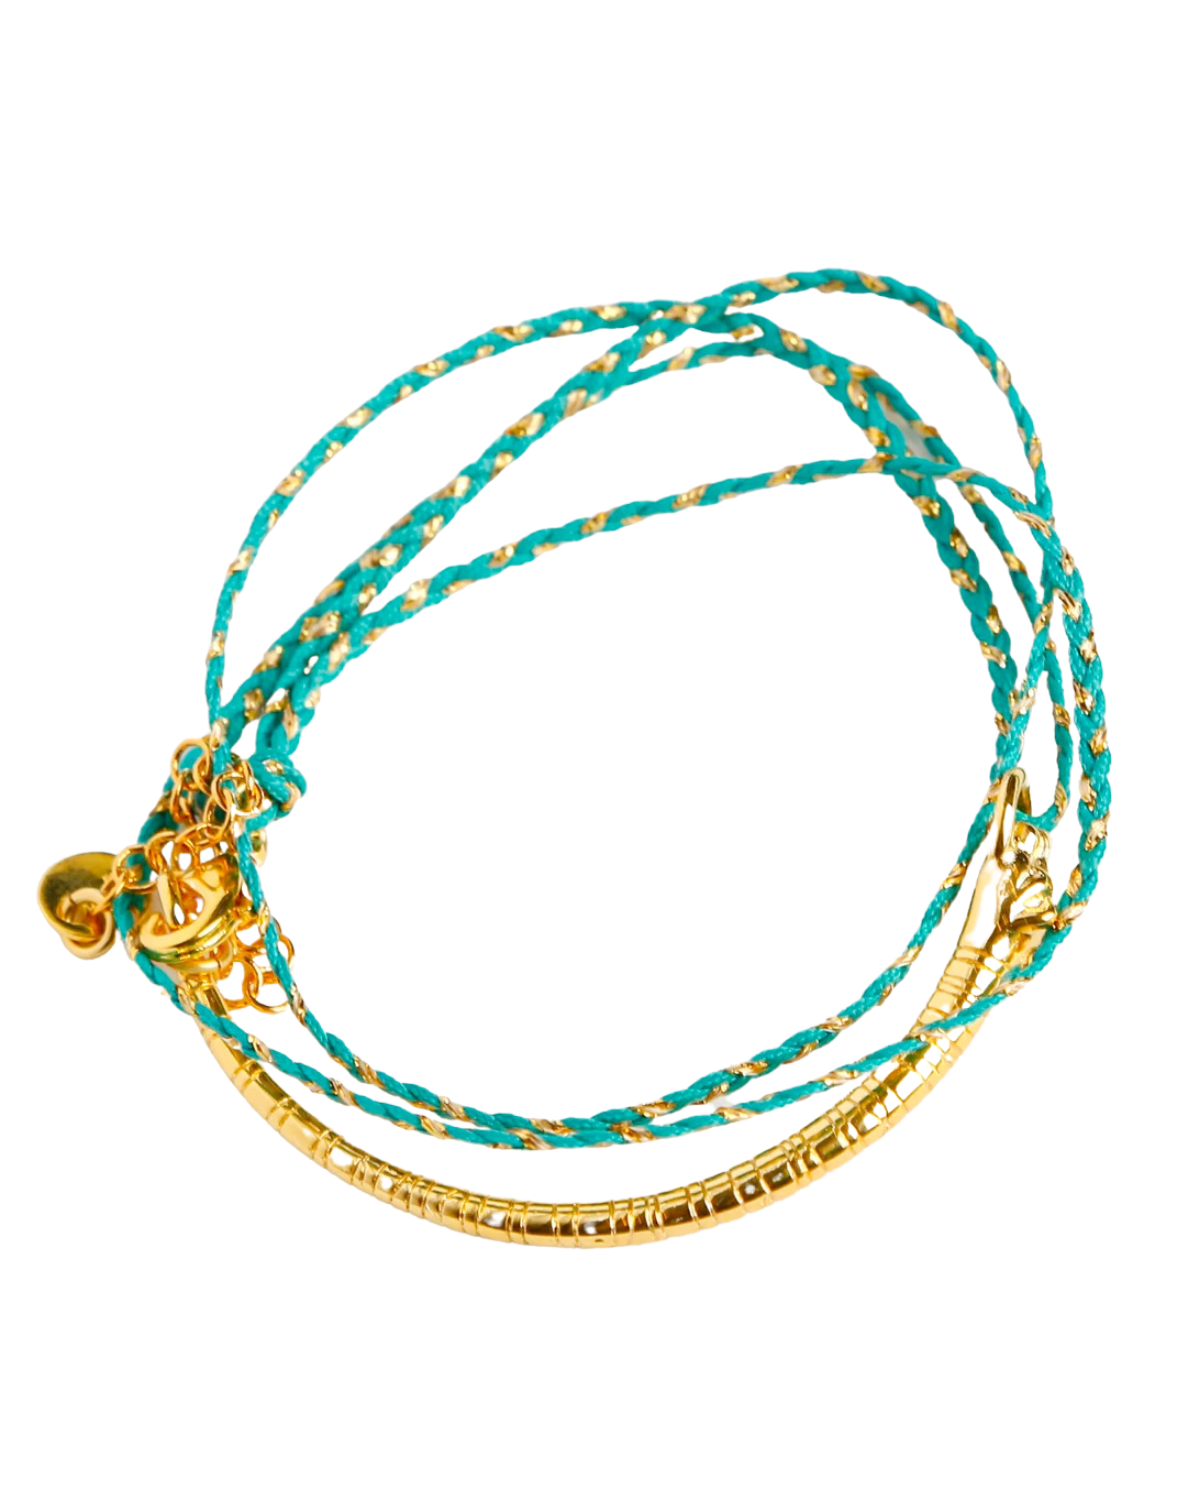 Tina Tiger Braided Yarn Bangle (Turquoise)